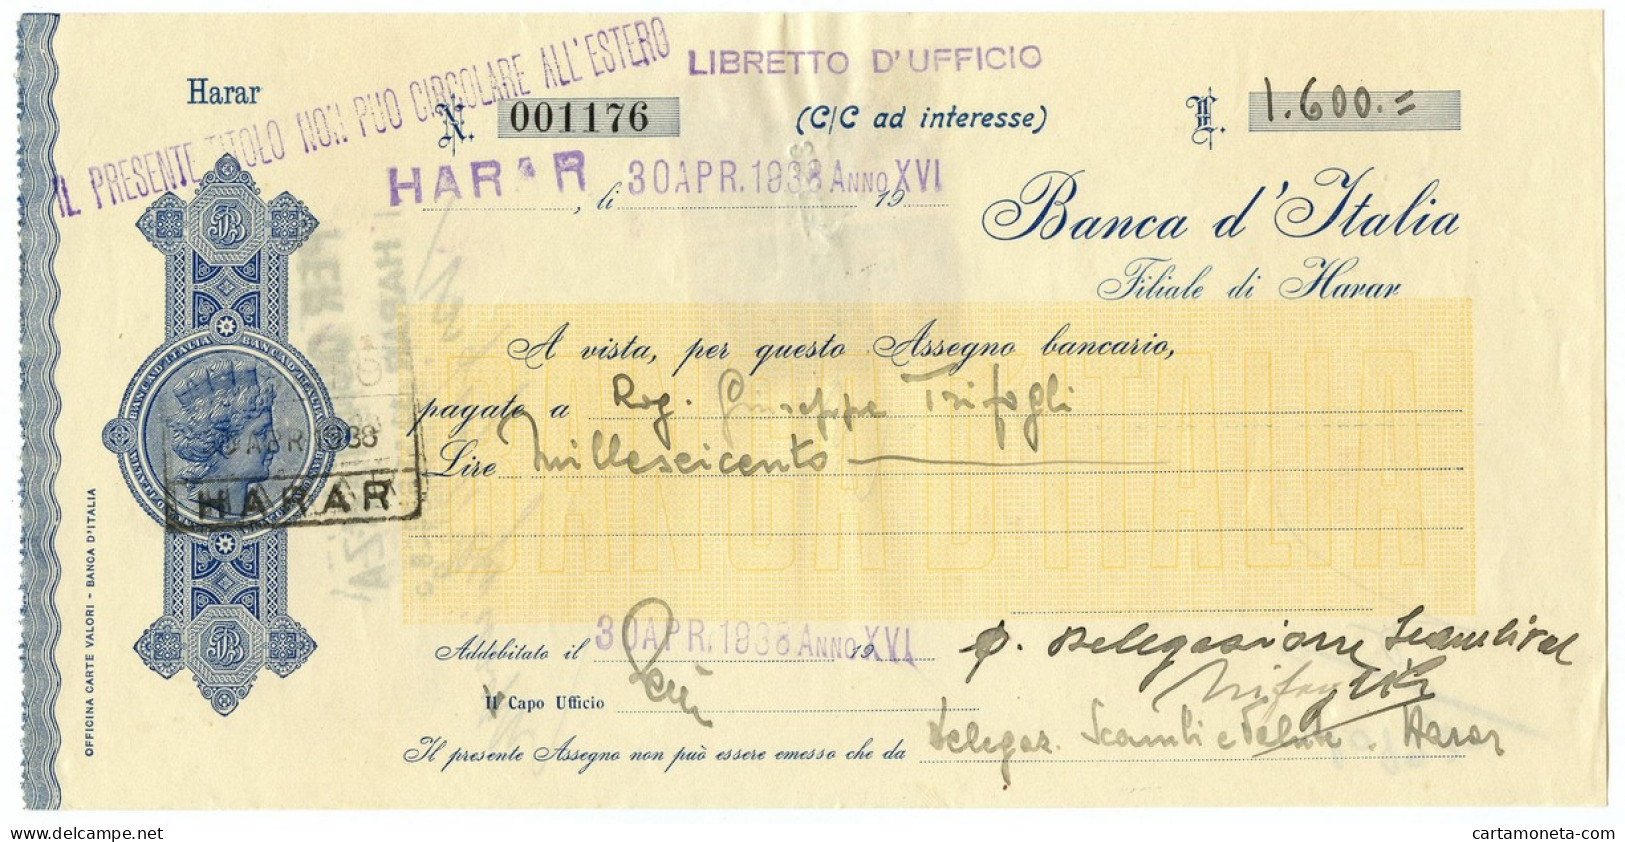 1600 LIRE ASSEGNO C/C AD INTERESSE BANCA D'ITALIA FILIALE HARAR 30/04/1938 SUP - Afrique Orientale Italienne